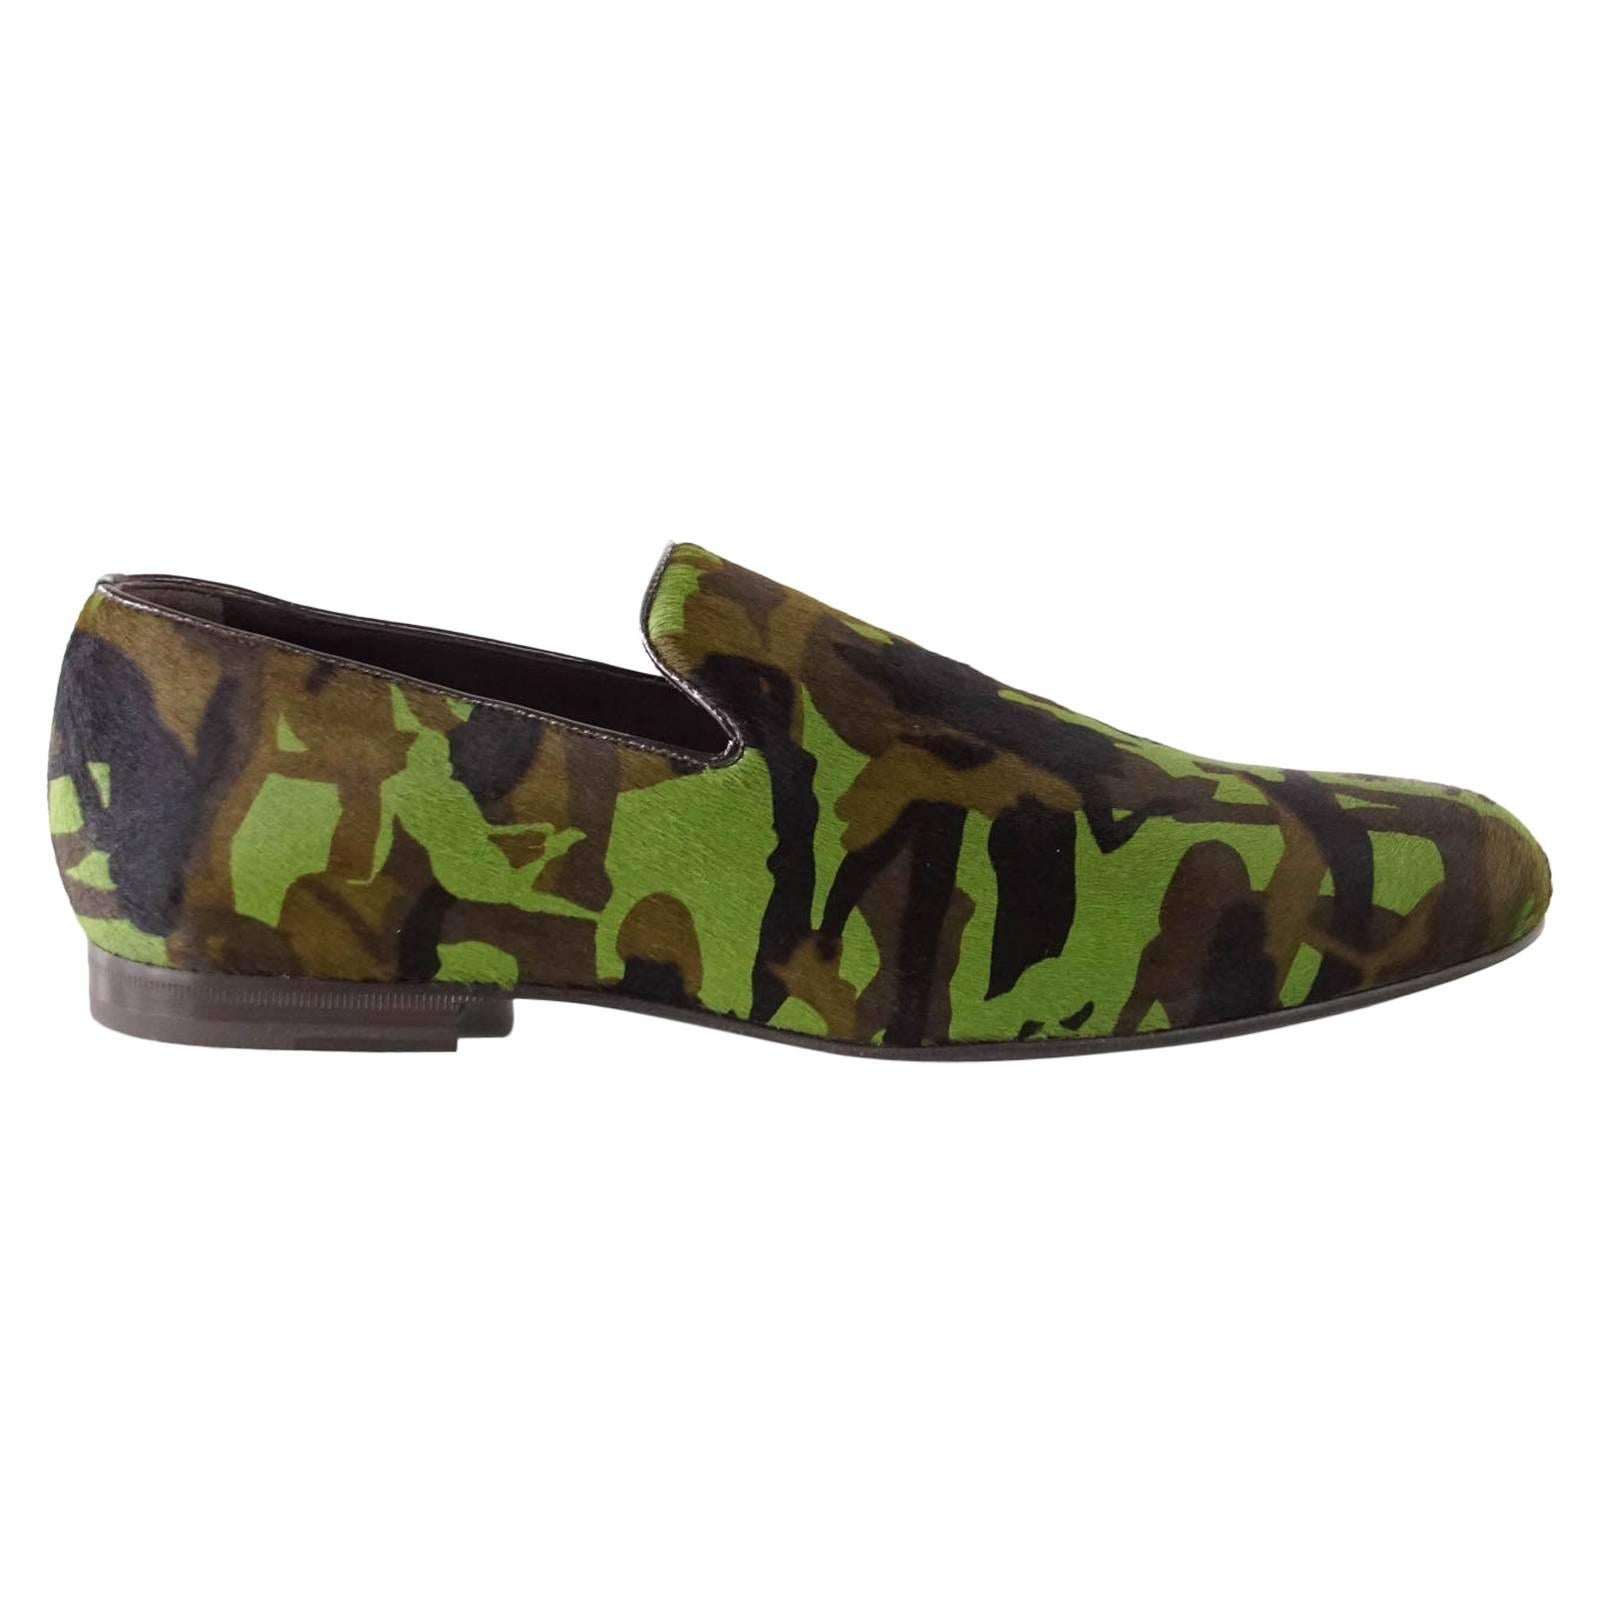 JIMMY CHOO Sloane Green Camouflage Printed Calf Hair Loafer Runway Trend 43/10  